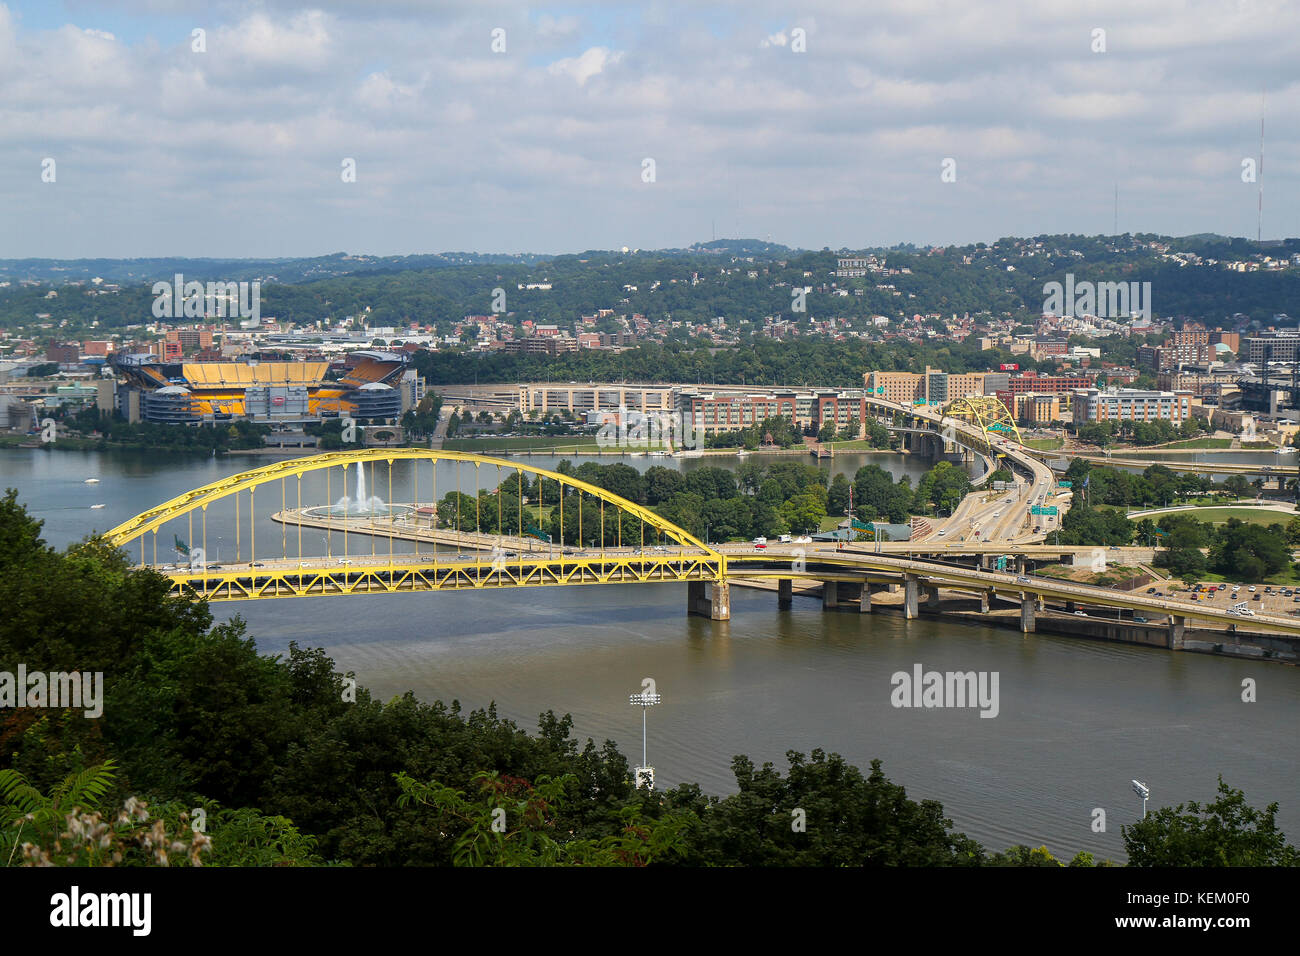 Pont de fort Pitt, Pittsburgh, Pennsylvania, united states Banque D'Images